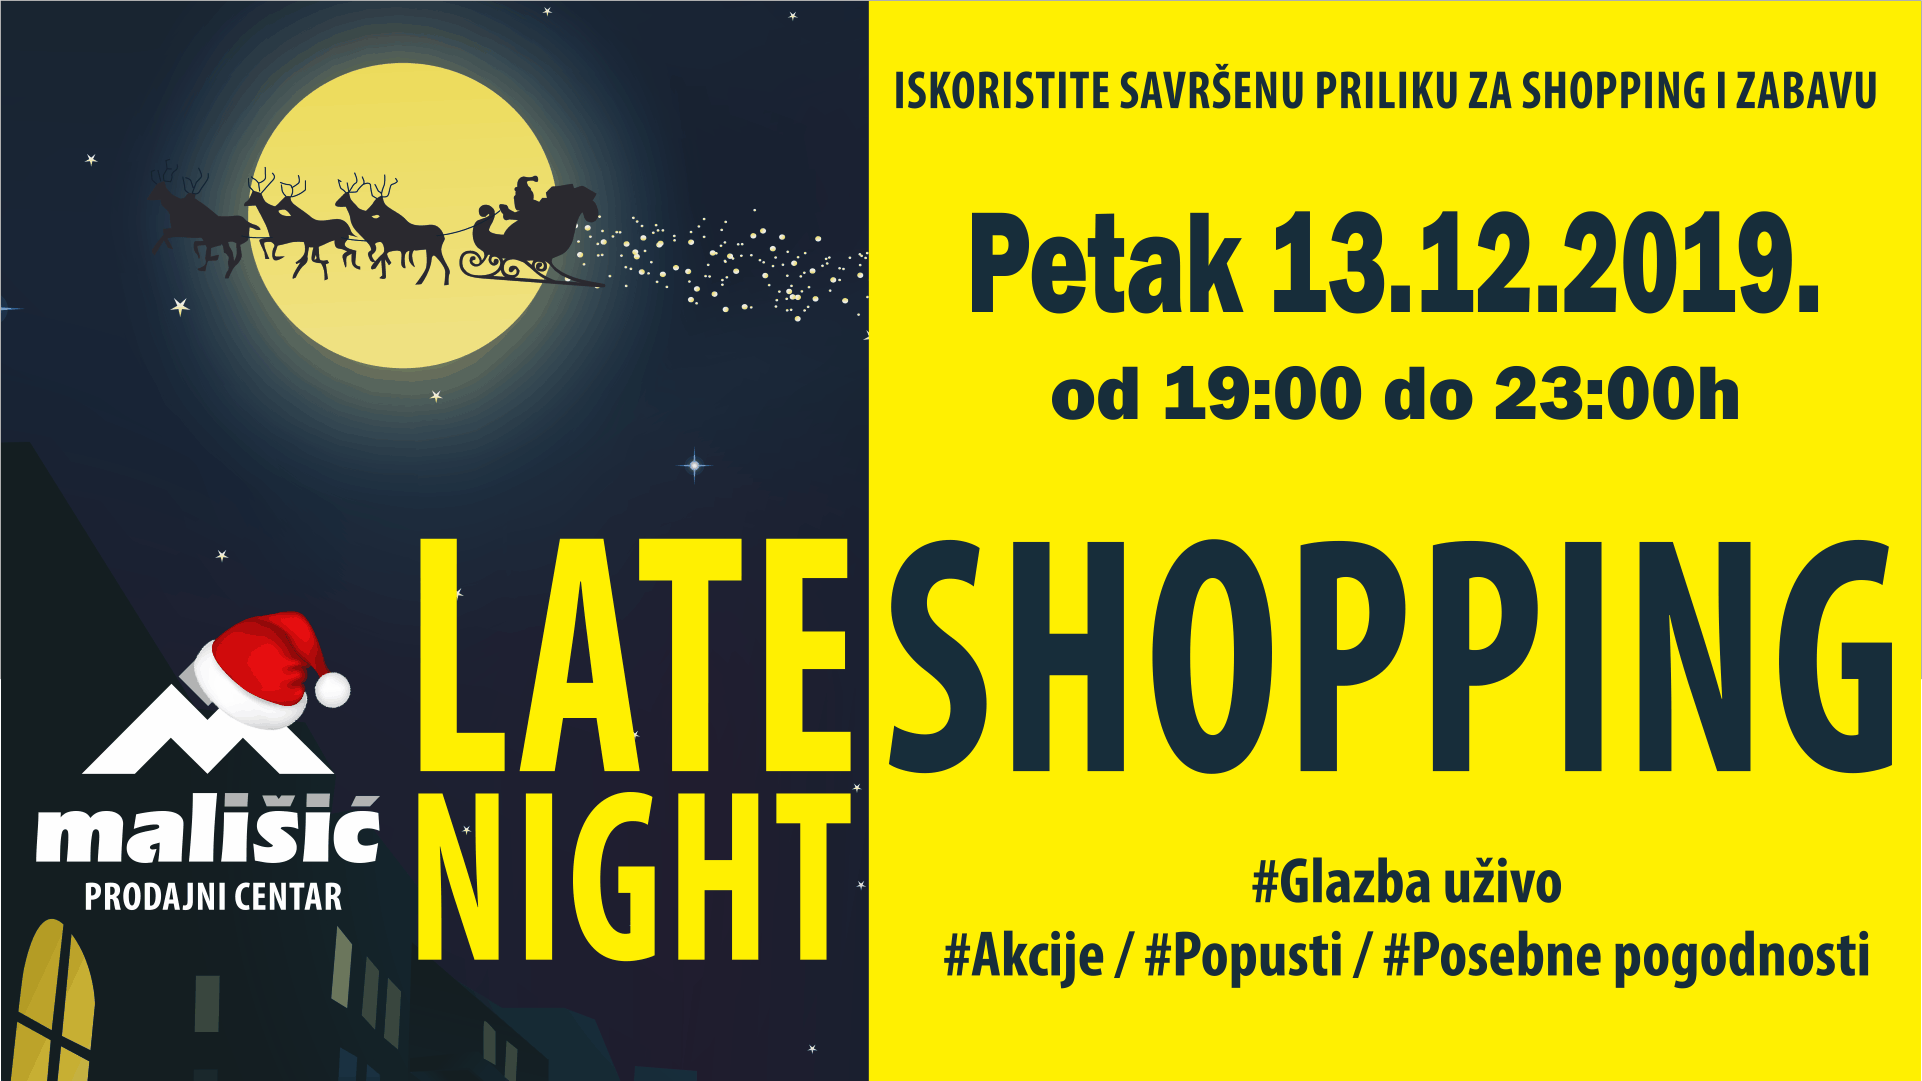 LATE NIGHT SHOPPING PC Mališić